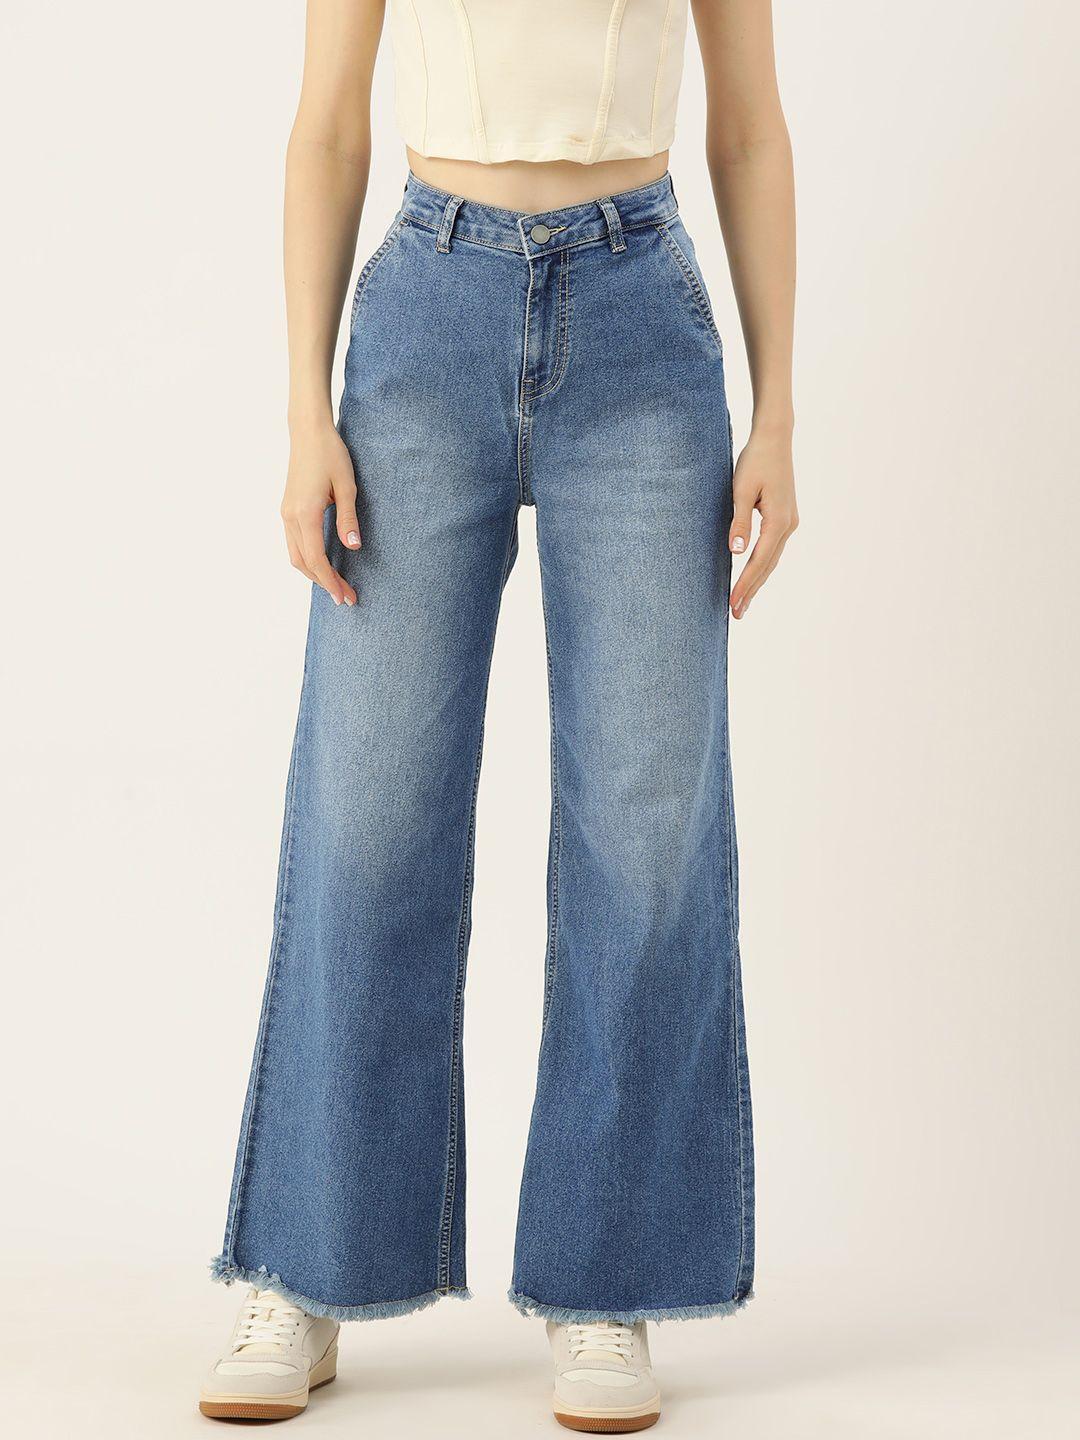 dressberry-women-wide-leg-light-fade-stretchable-jeans